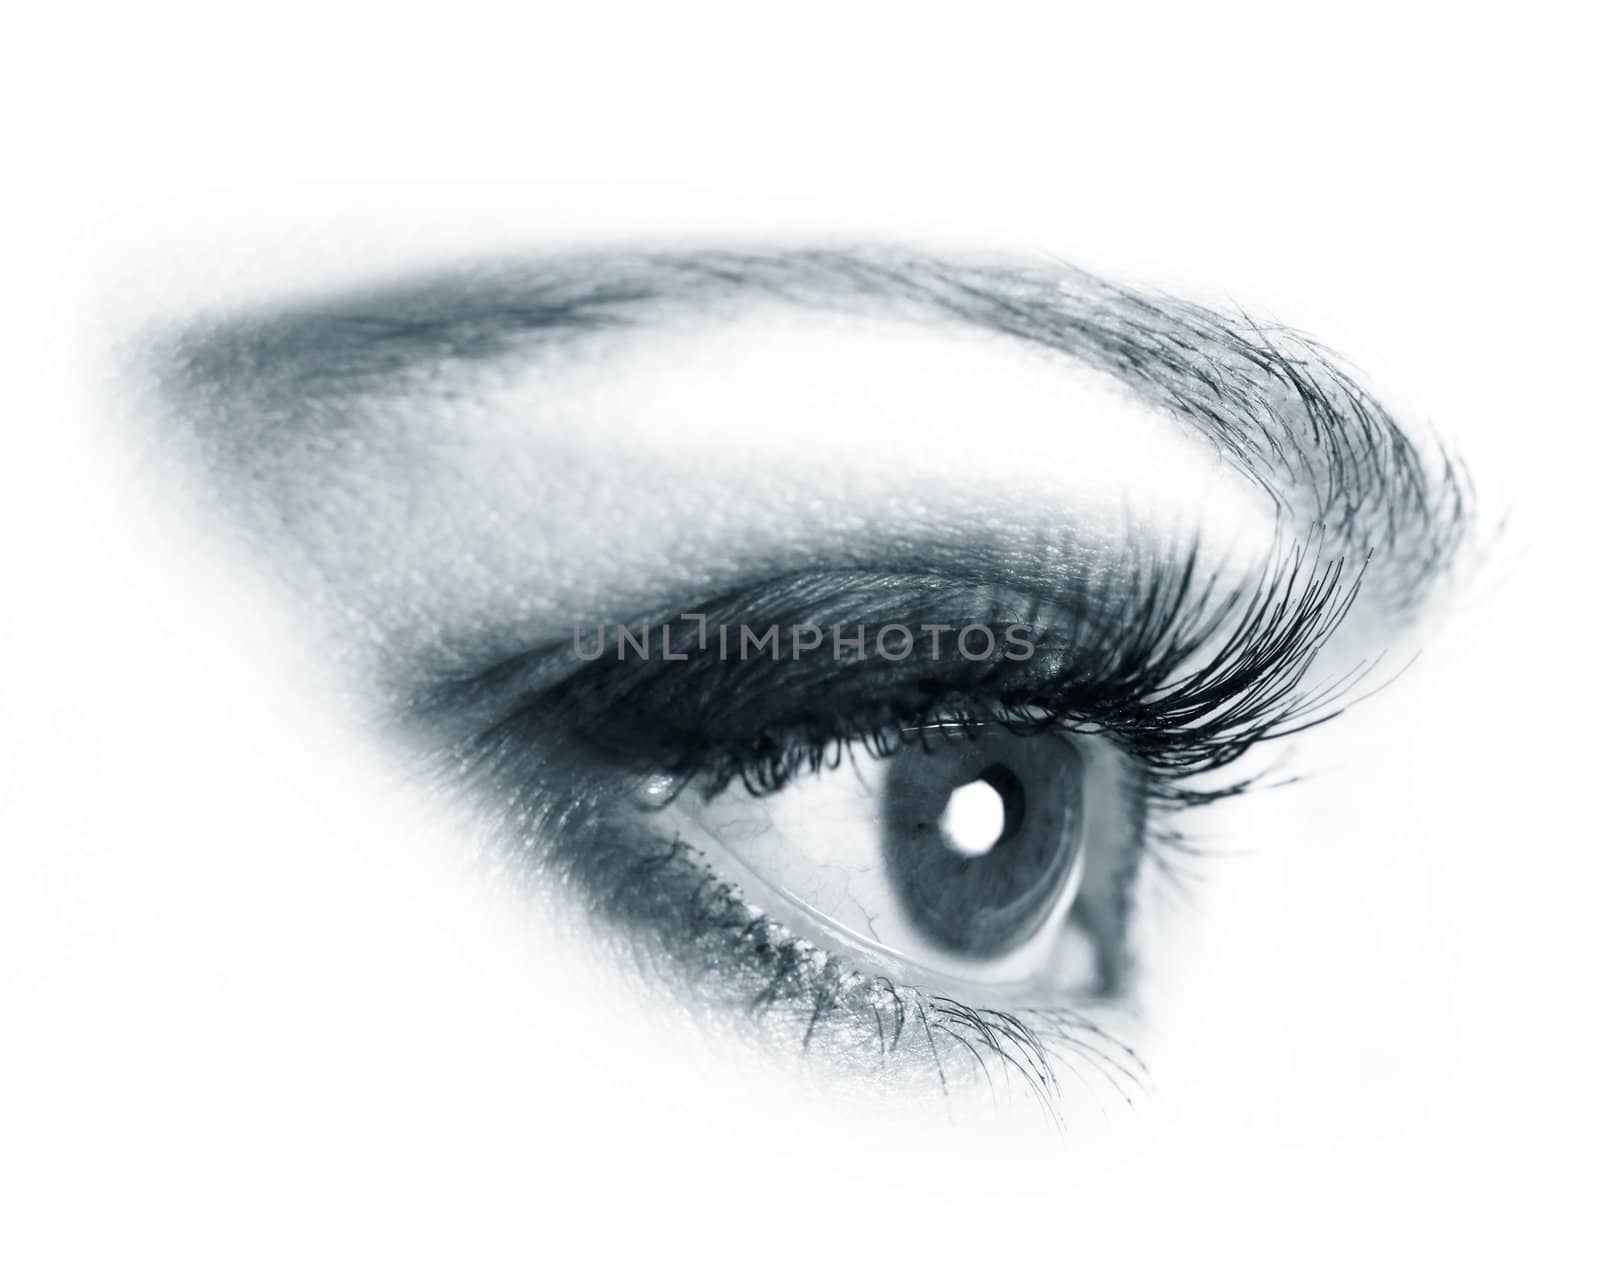 Close-up portrait of a beautiful female eye